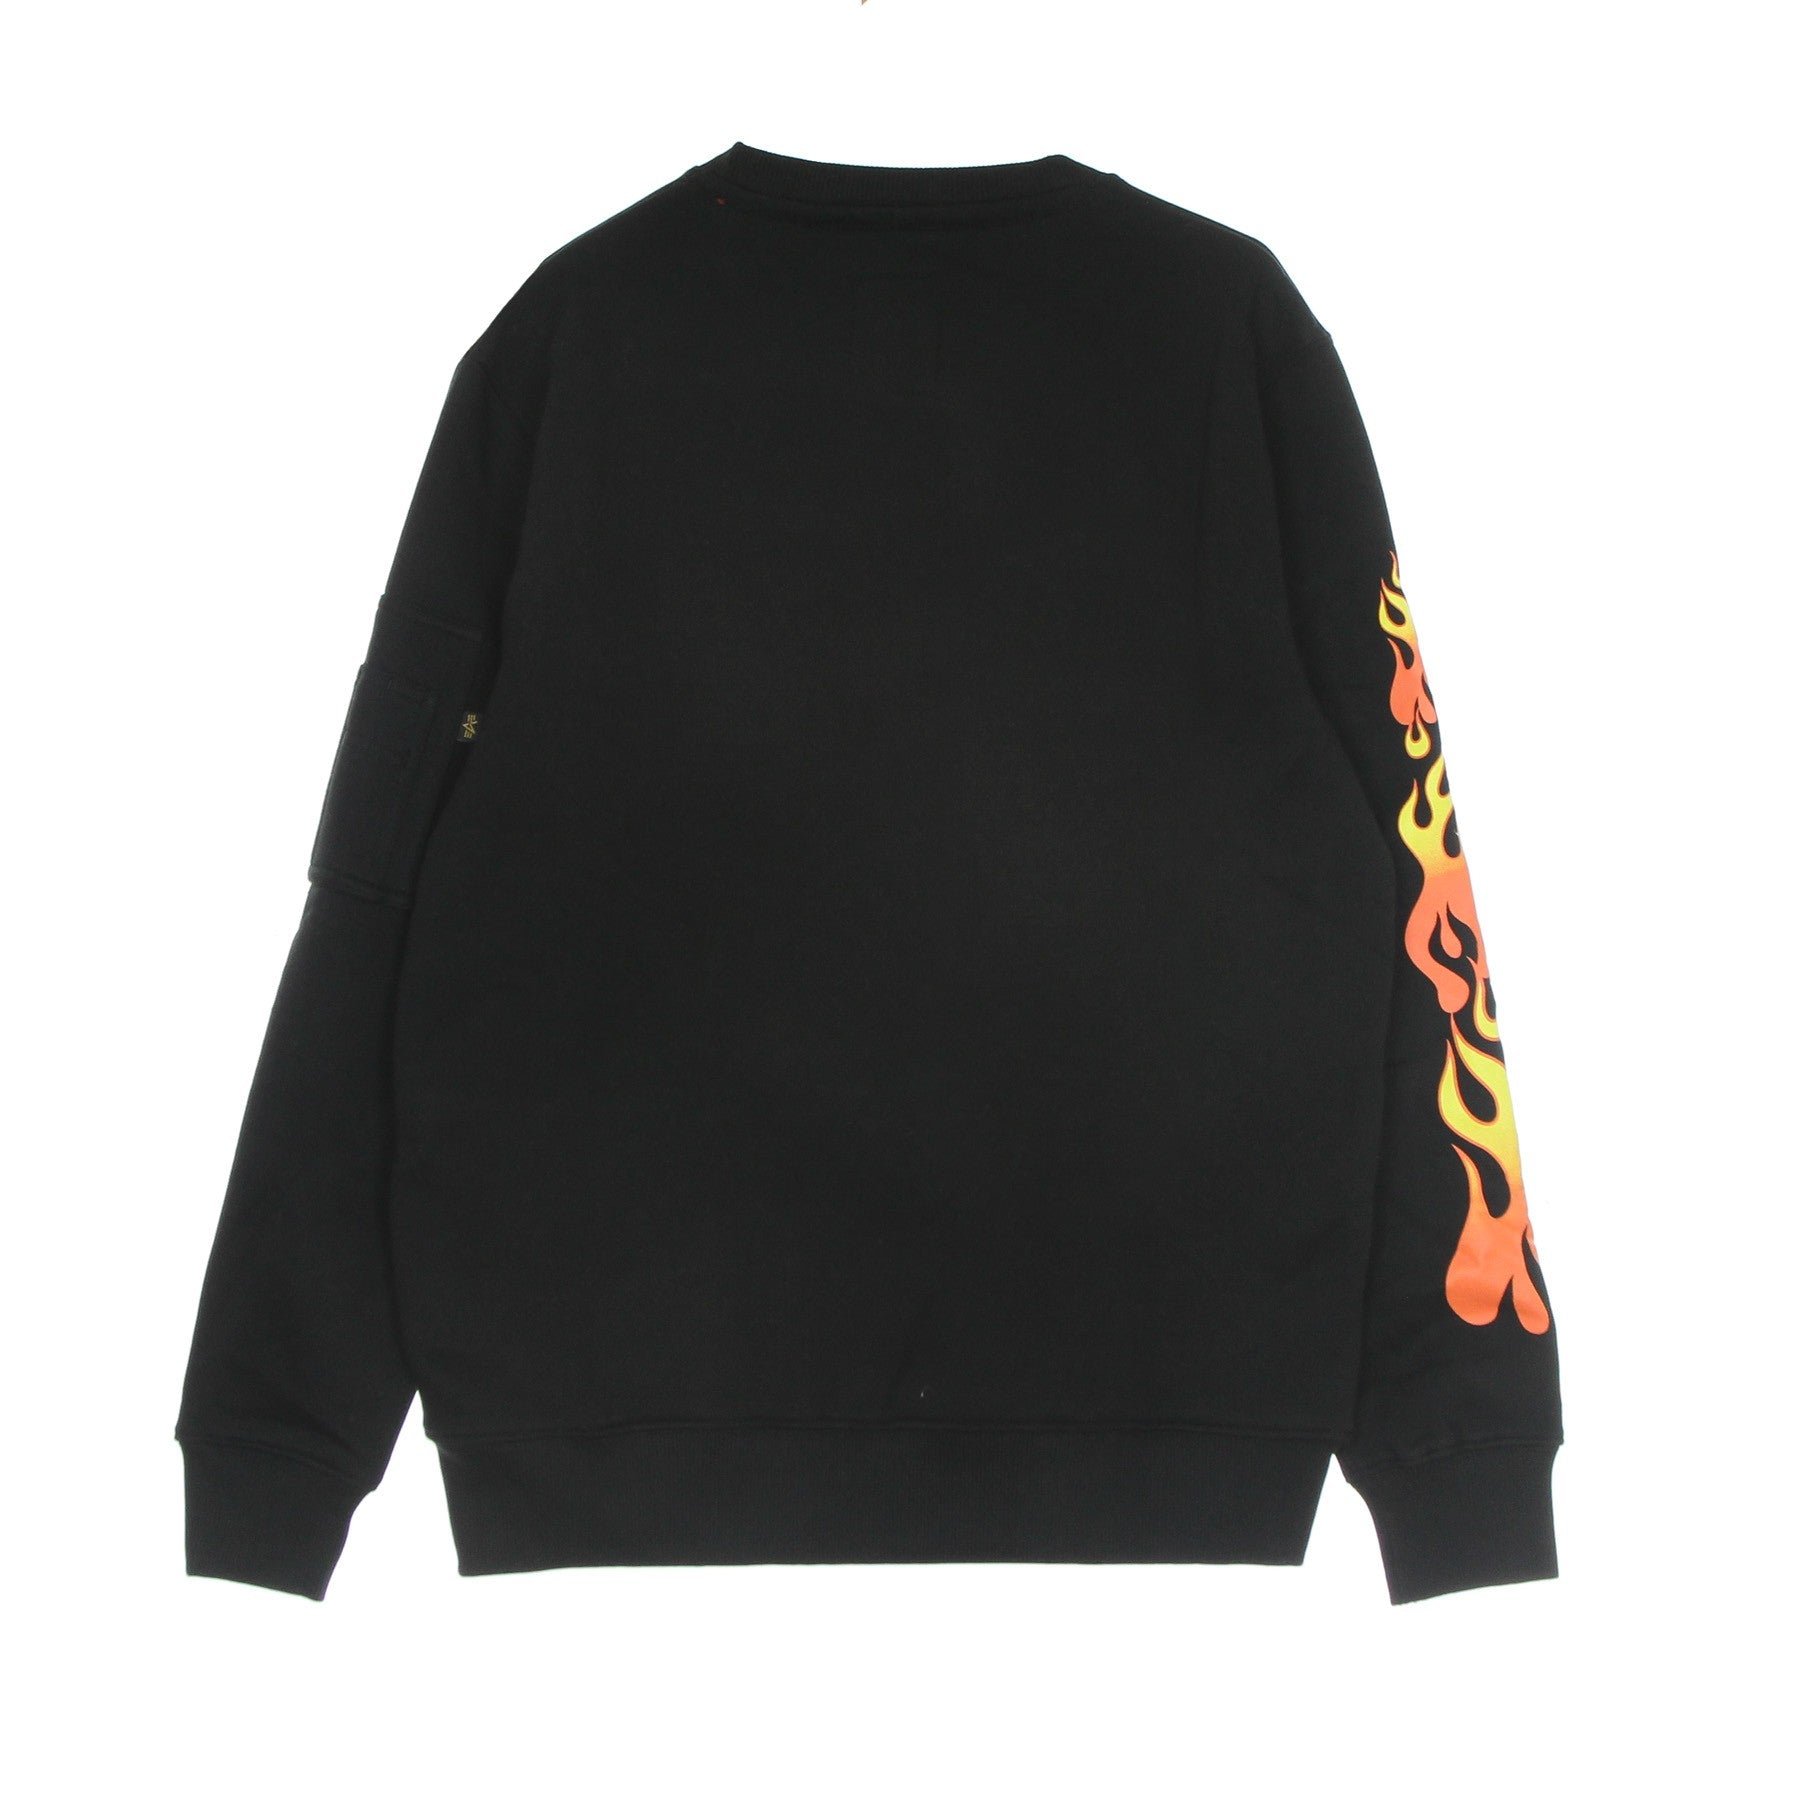 Flame Sweater X Hot Wheels Men's Crewneck Sweatshirt Black